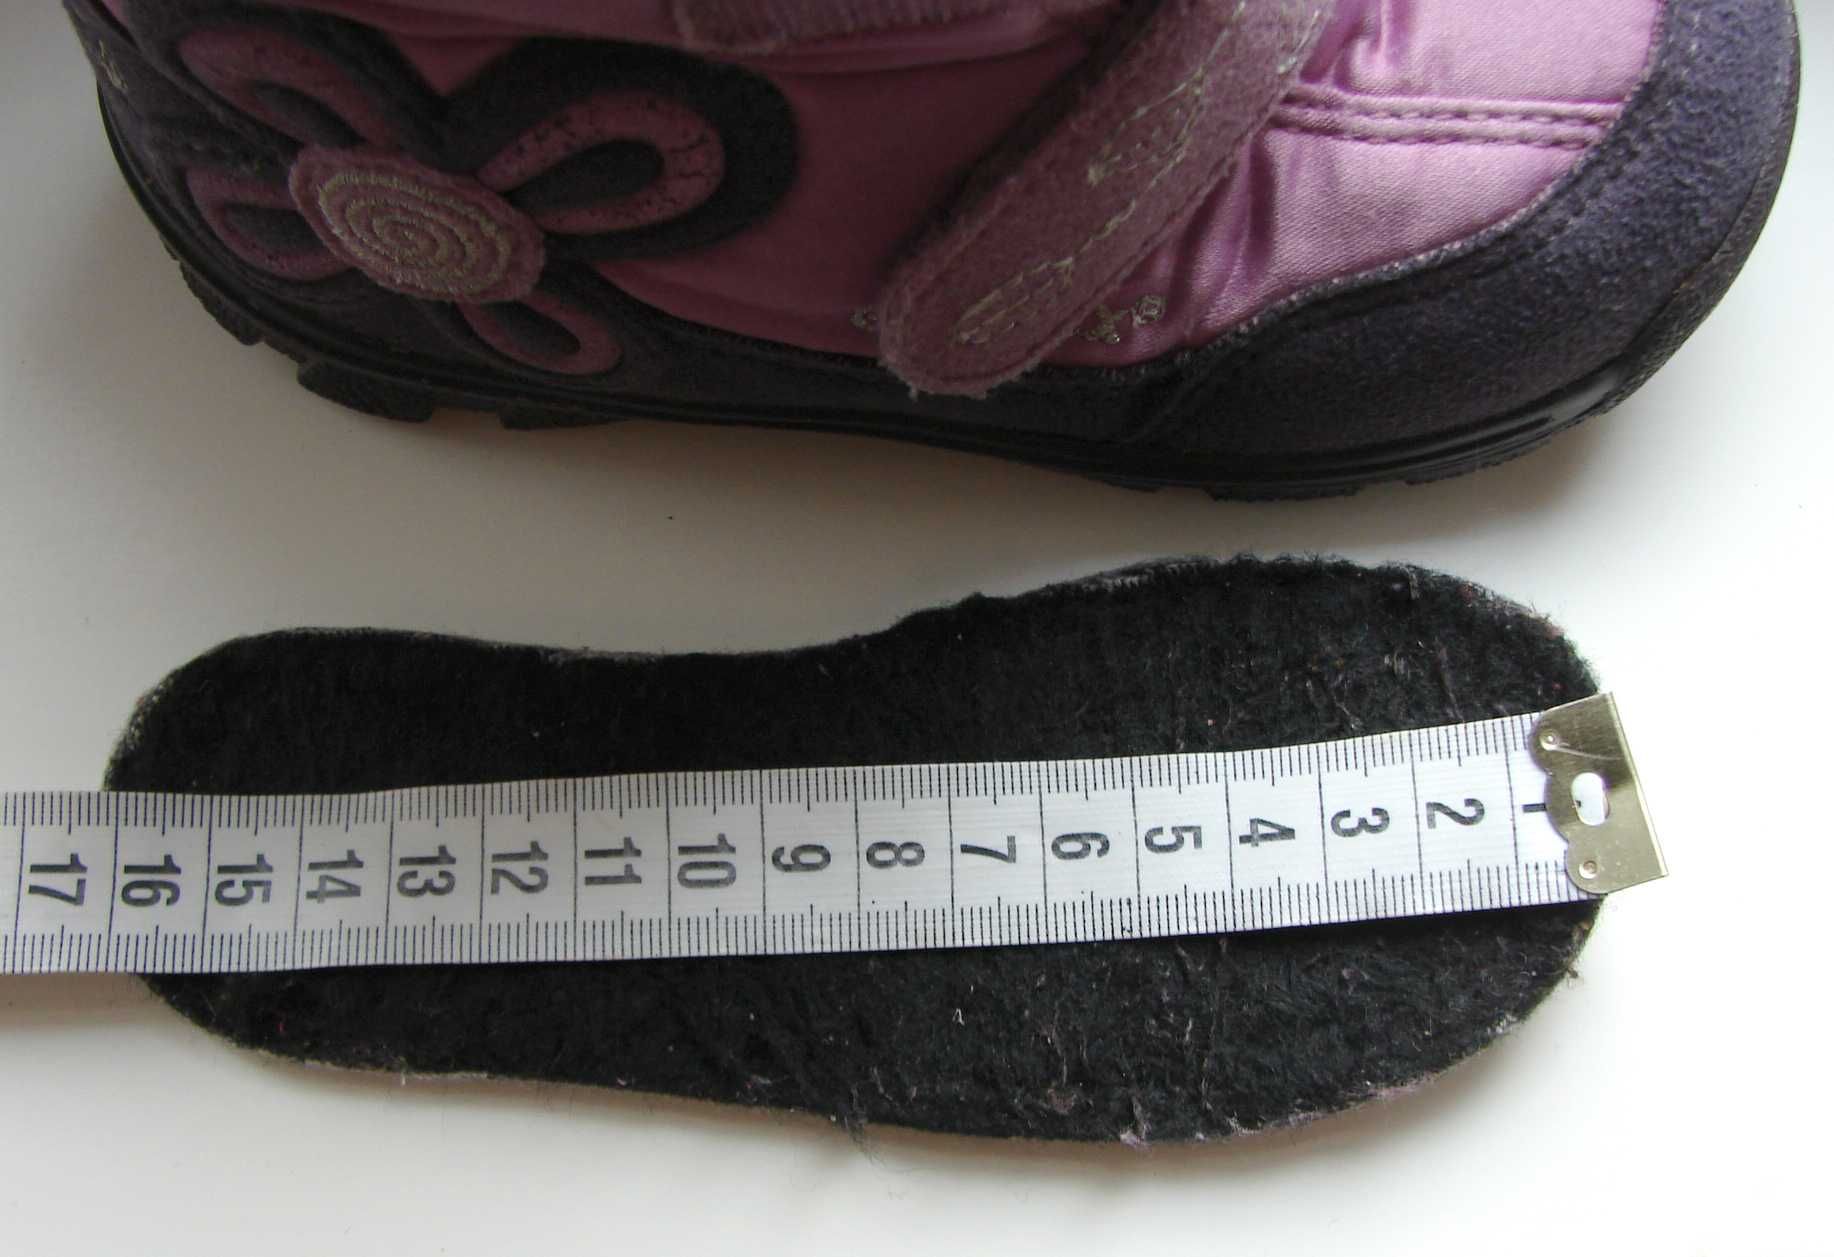 Зимние сапоги ботинки Viking для девочки 25 р., 15,5-16 см